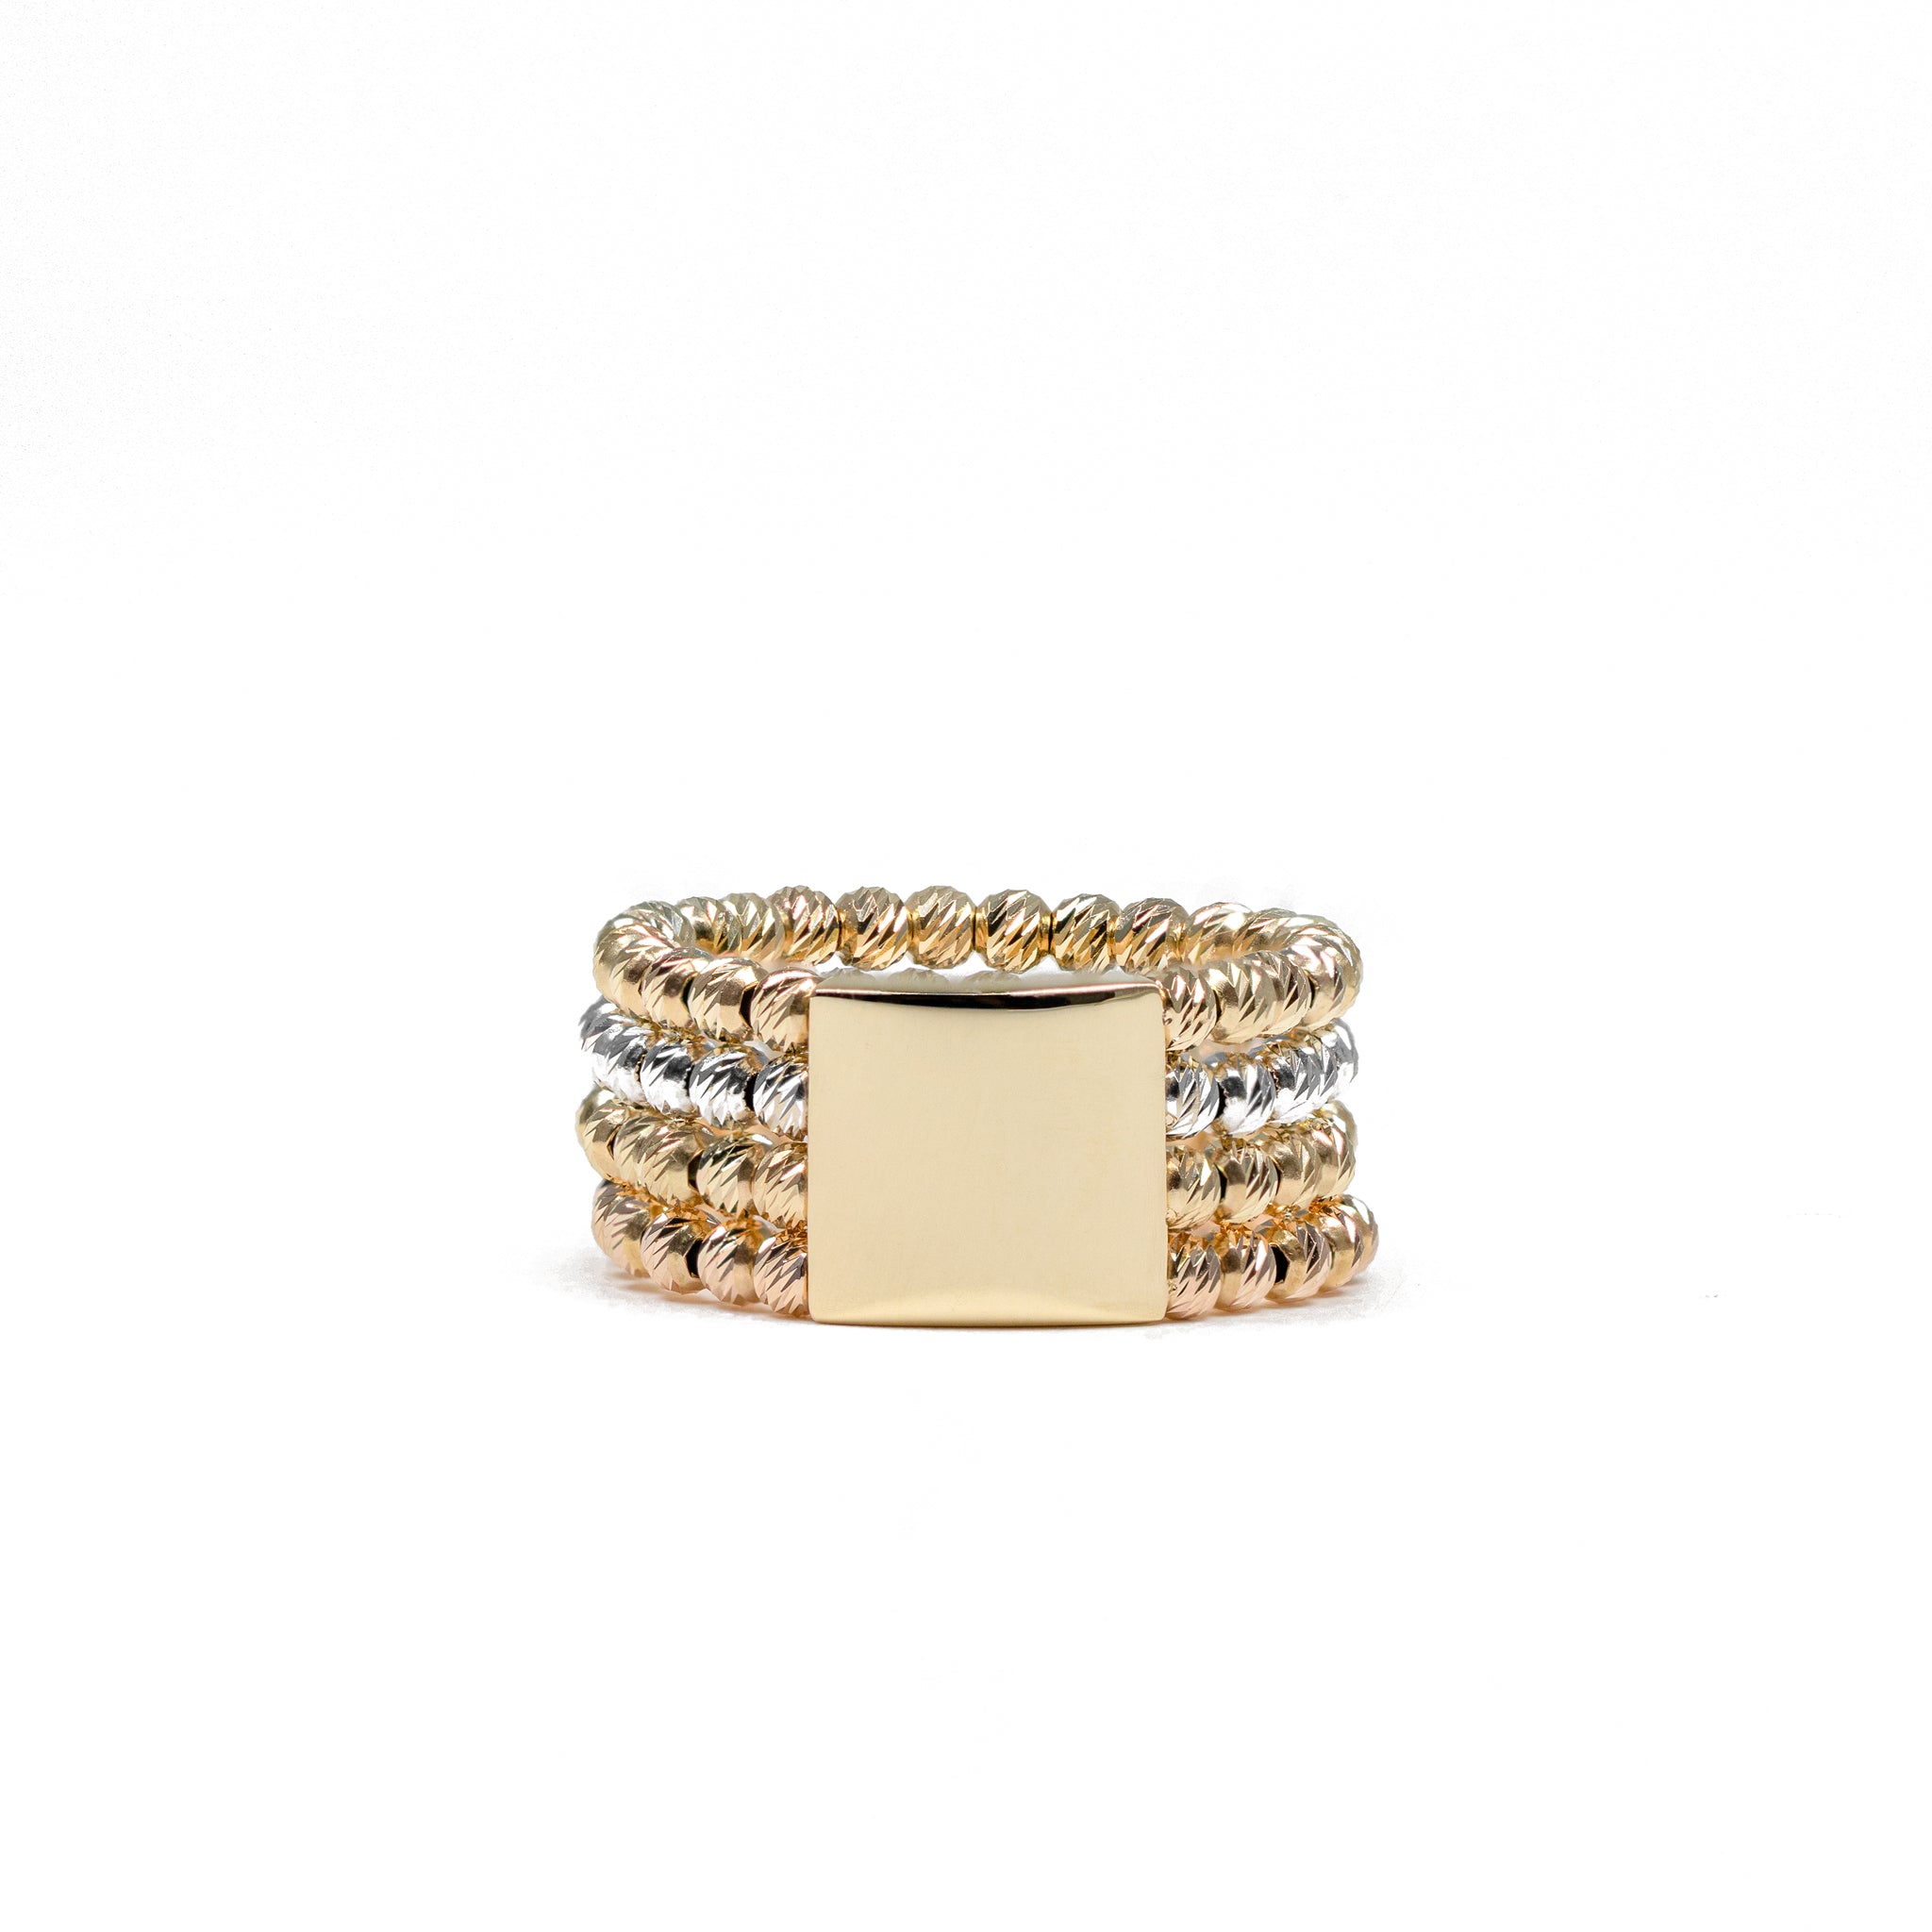 J'adior ring Dior Gold size 5 ¼ US in Metal - 42381700